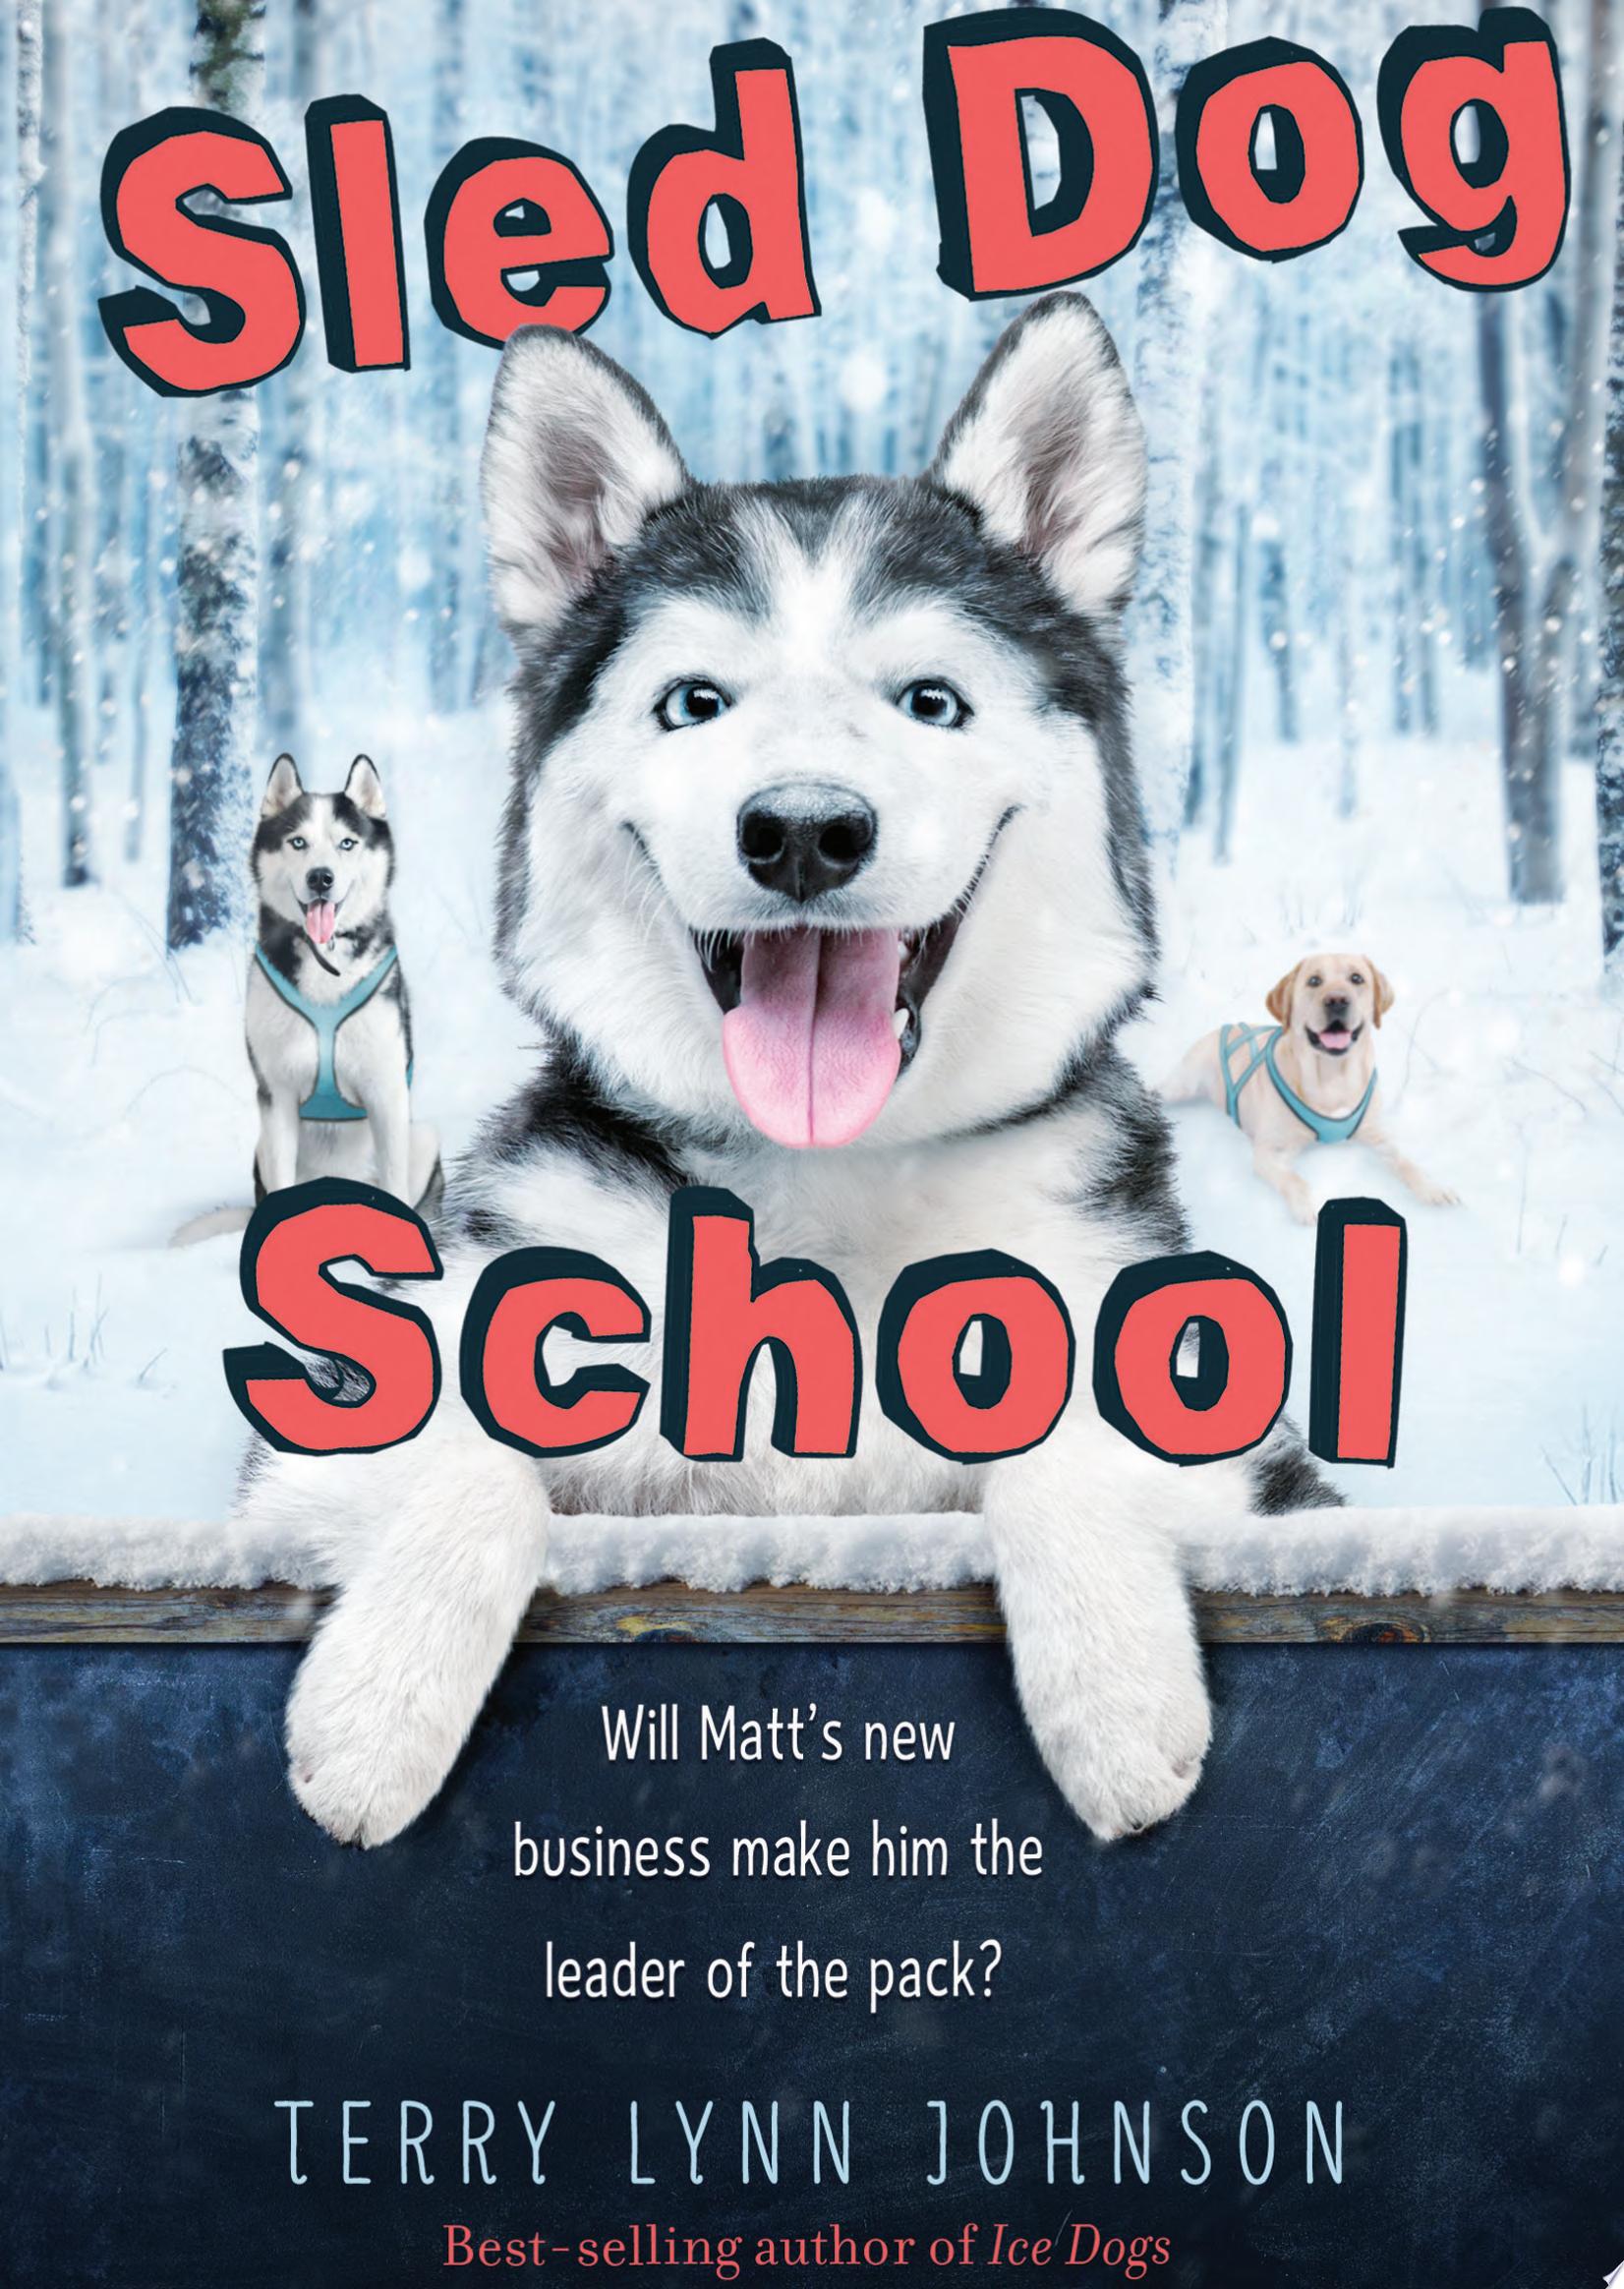 Image for "Sled Dog School"